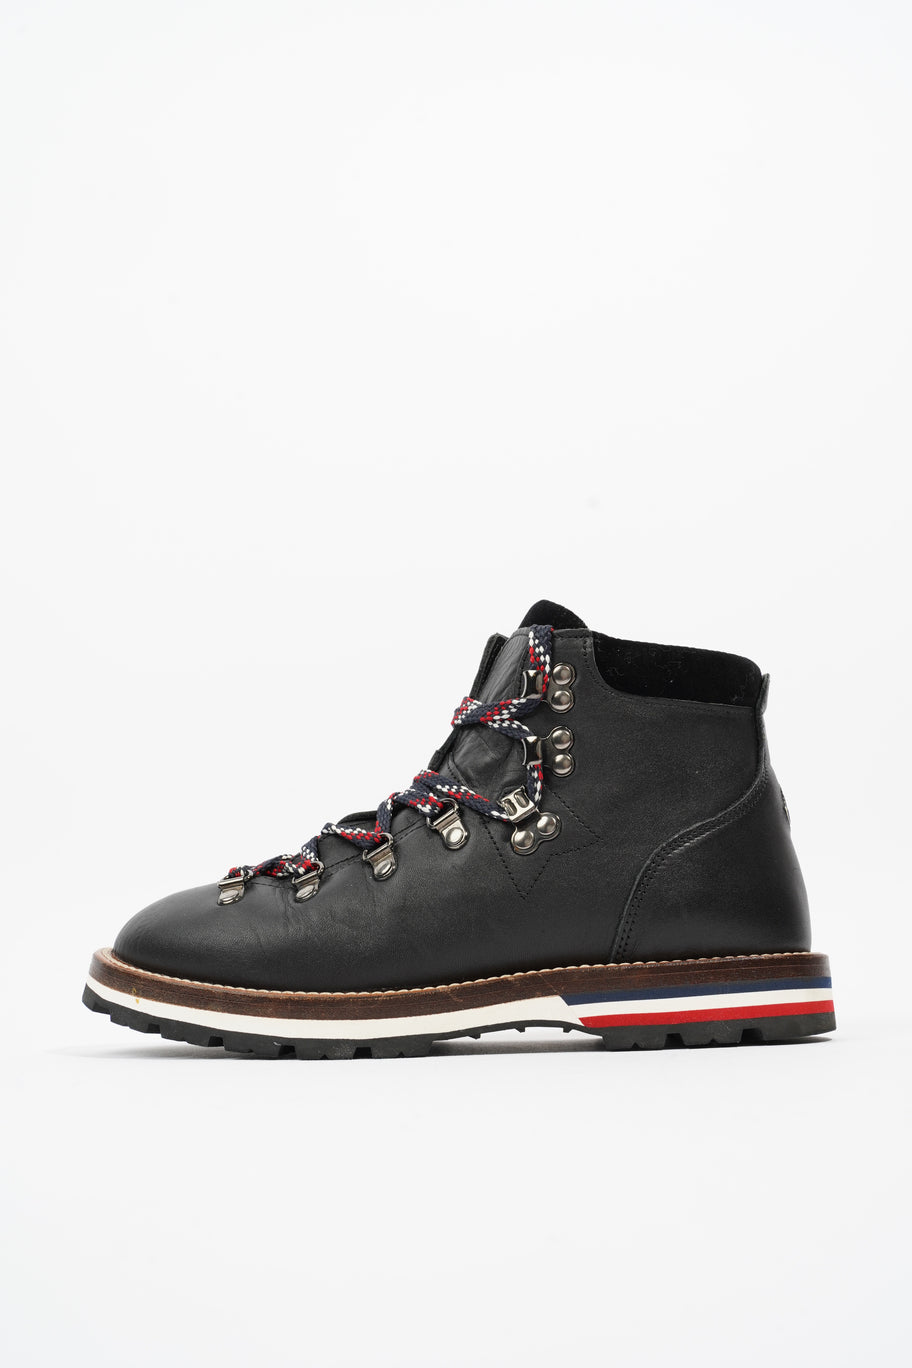 Ankle Boot Black Leather EU 38 UK 5 Image 5